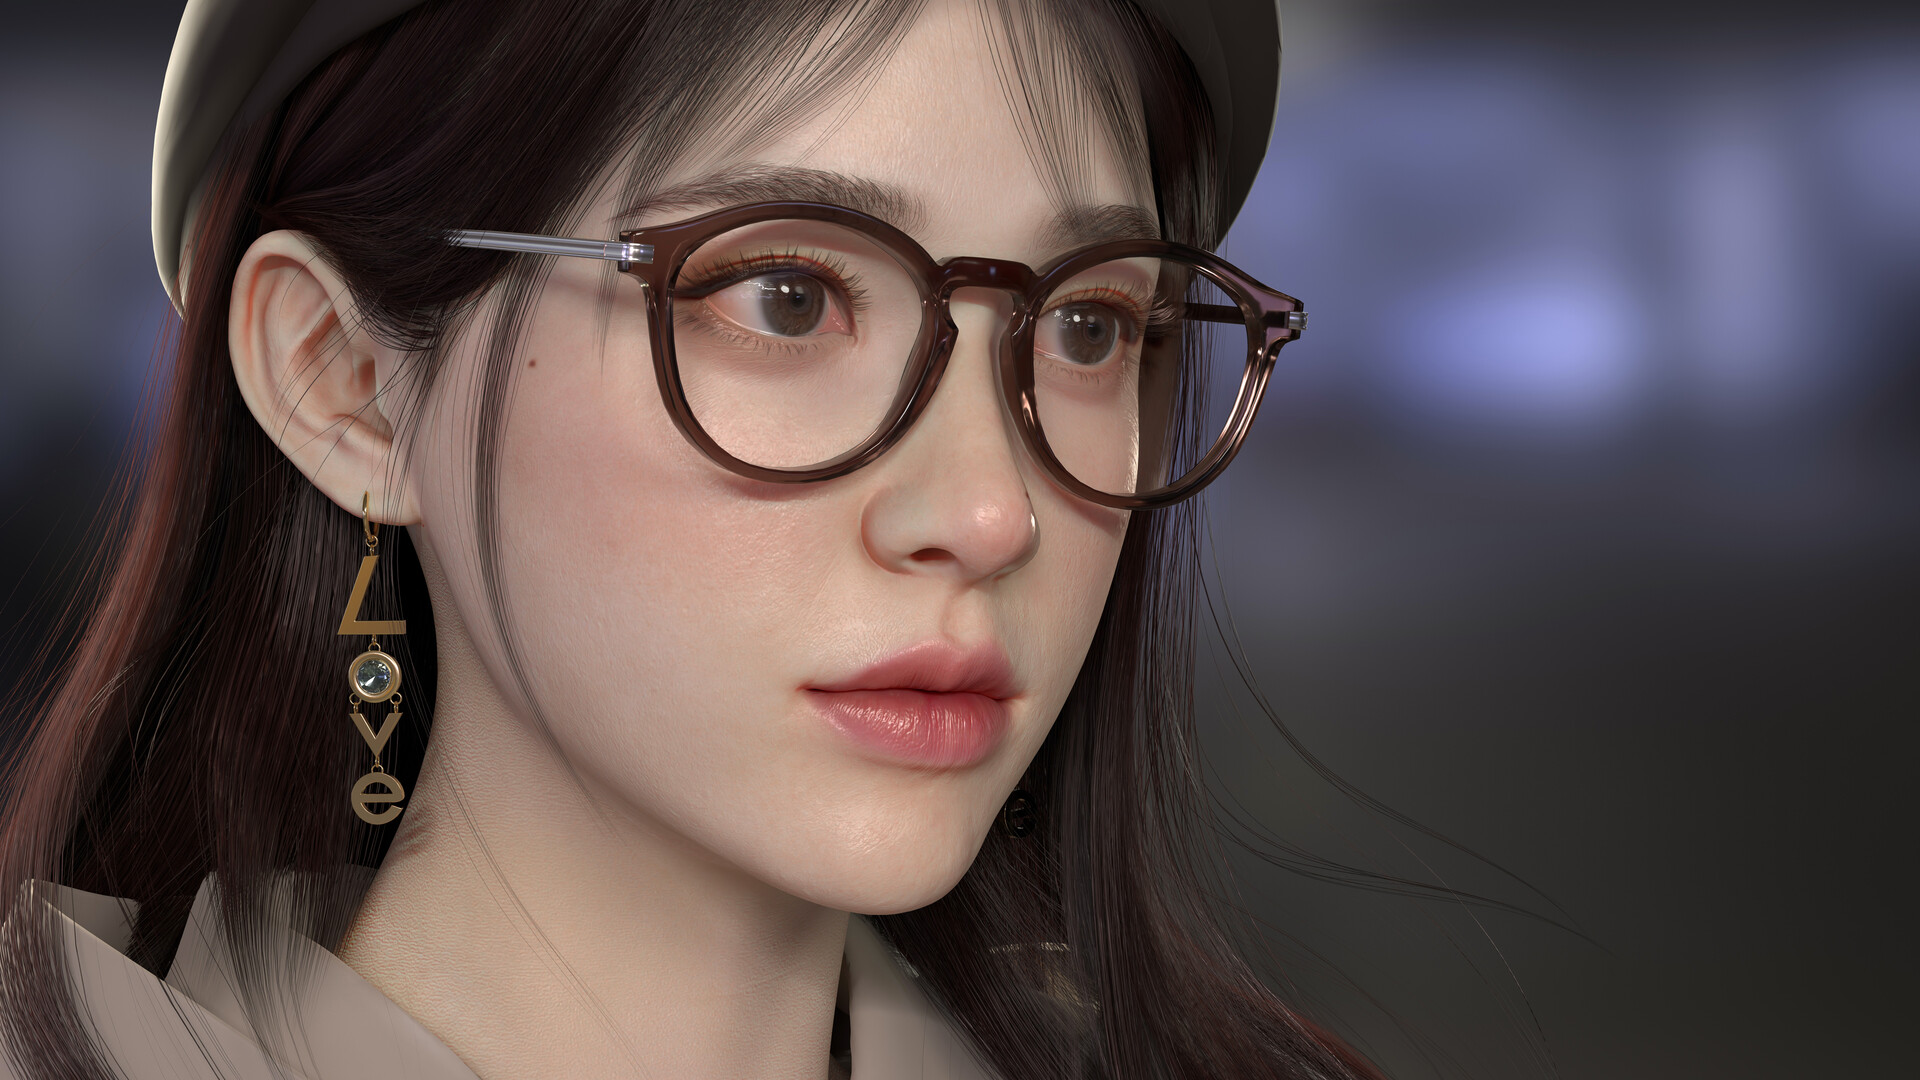 Artwork Digital Art Women Face Glasses Women With Glasses Closeup 1920x1080